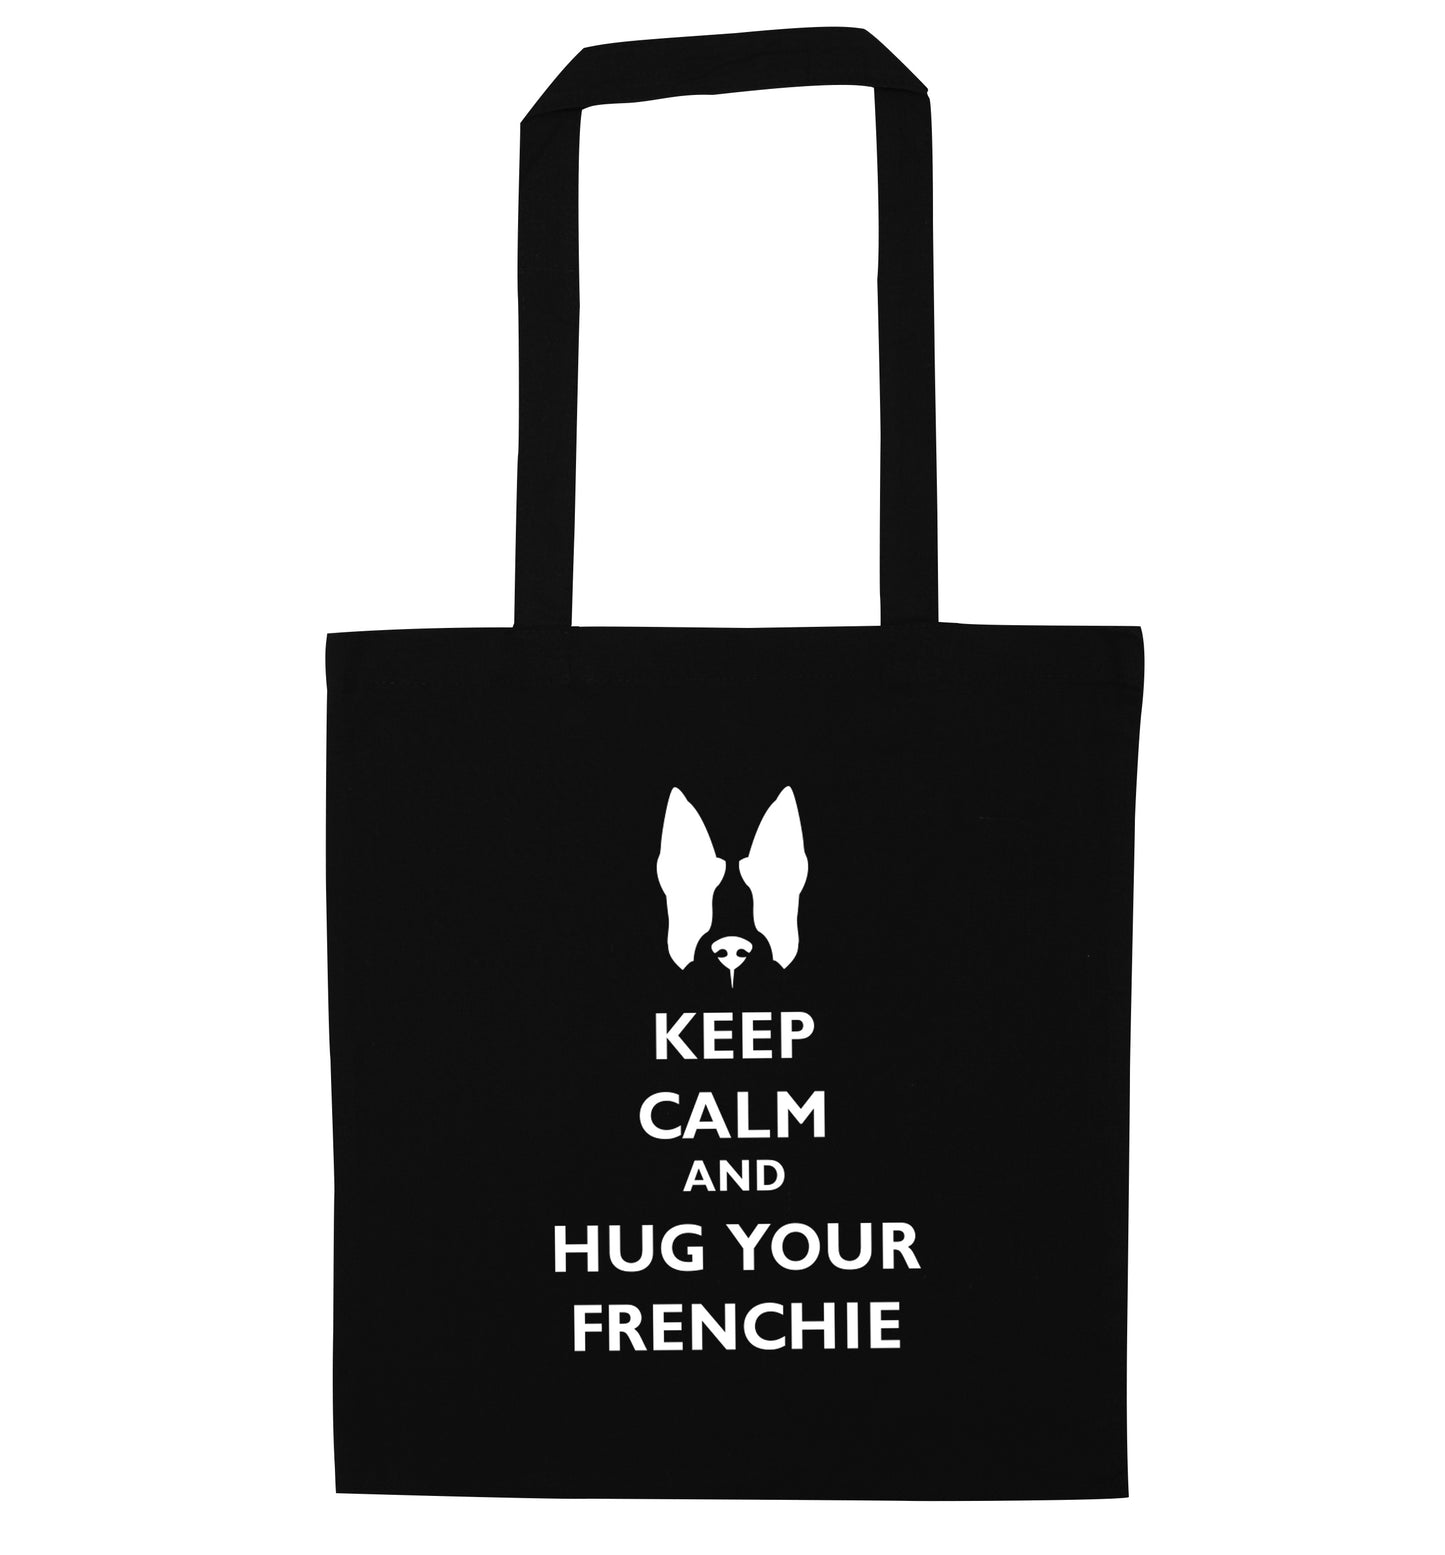 Keep calm and hug your frenchie black tote bag